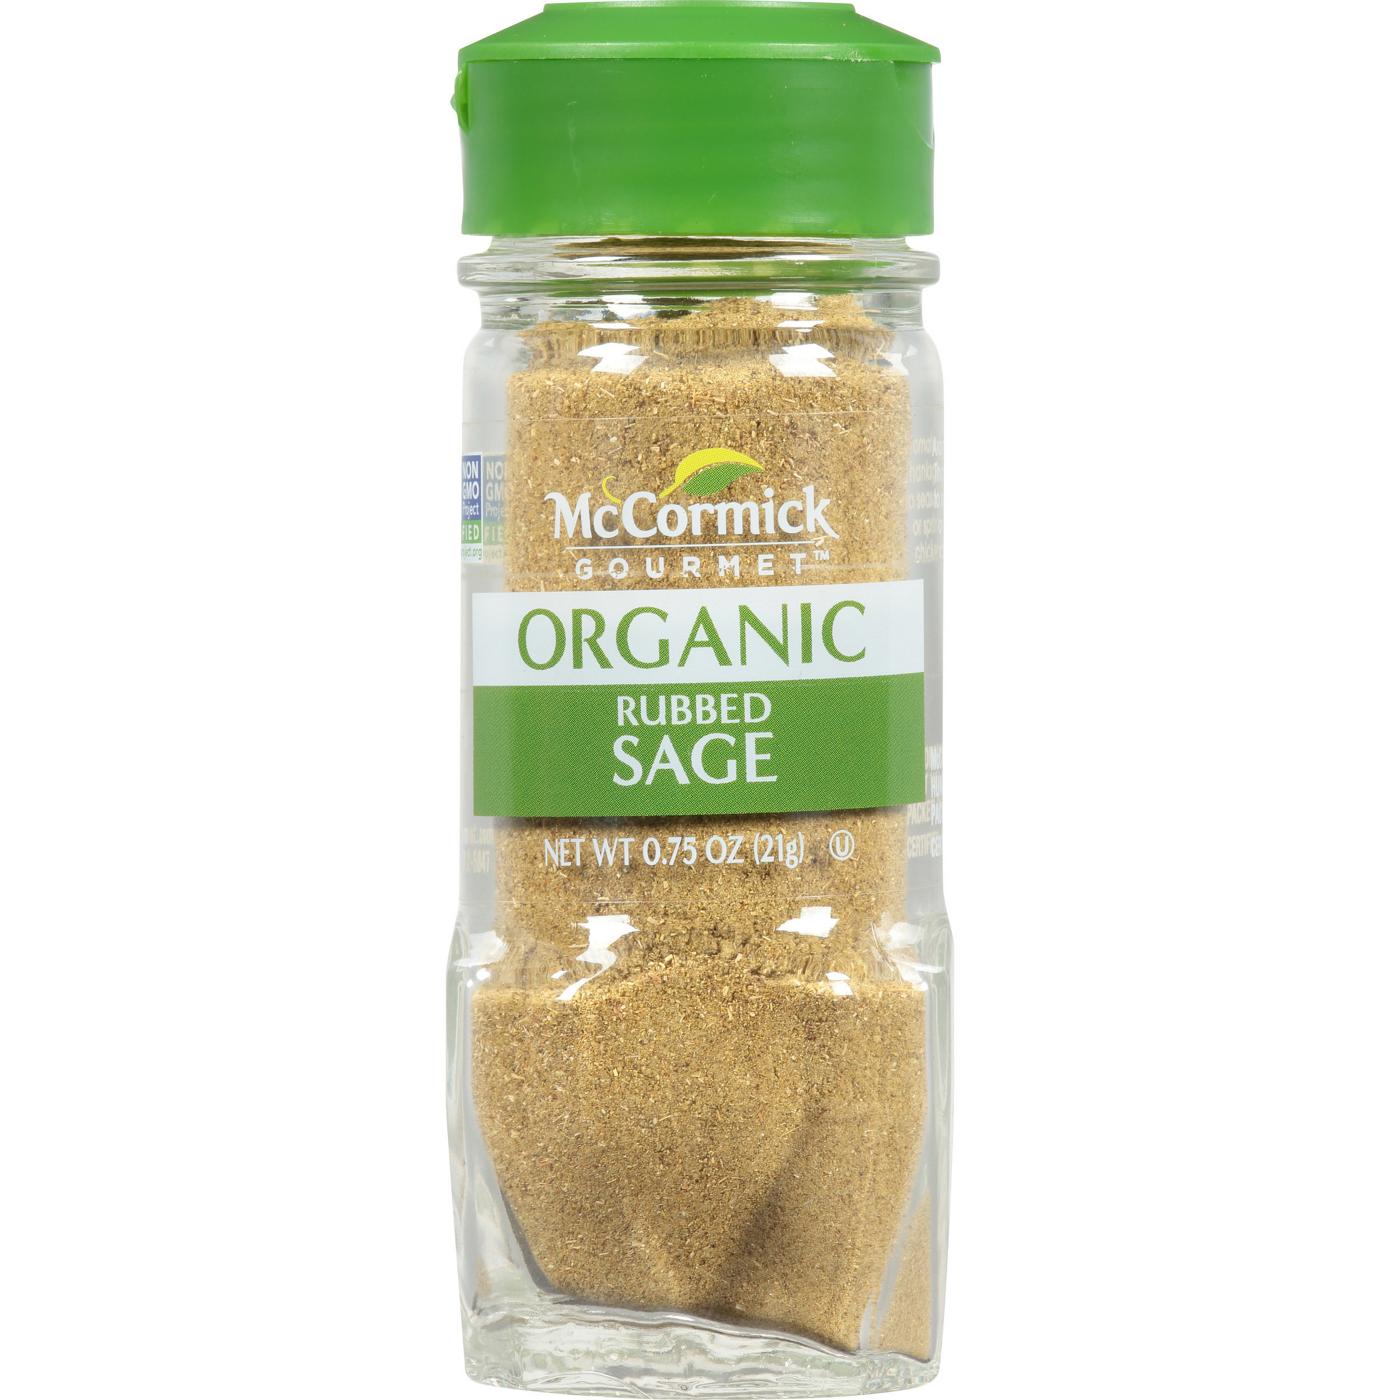 McCormick Organic Rubbed Sage; image 1 of 2